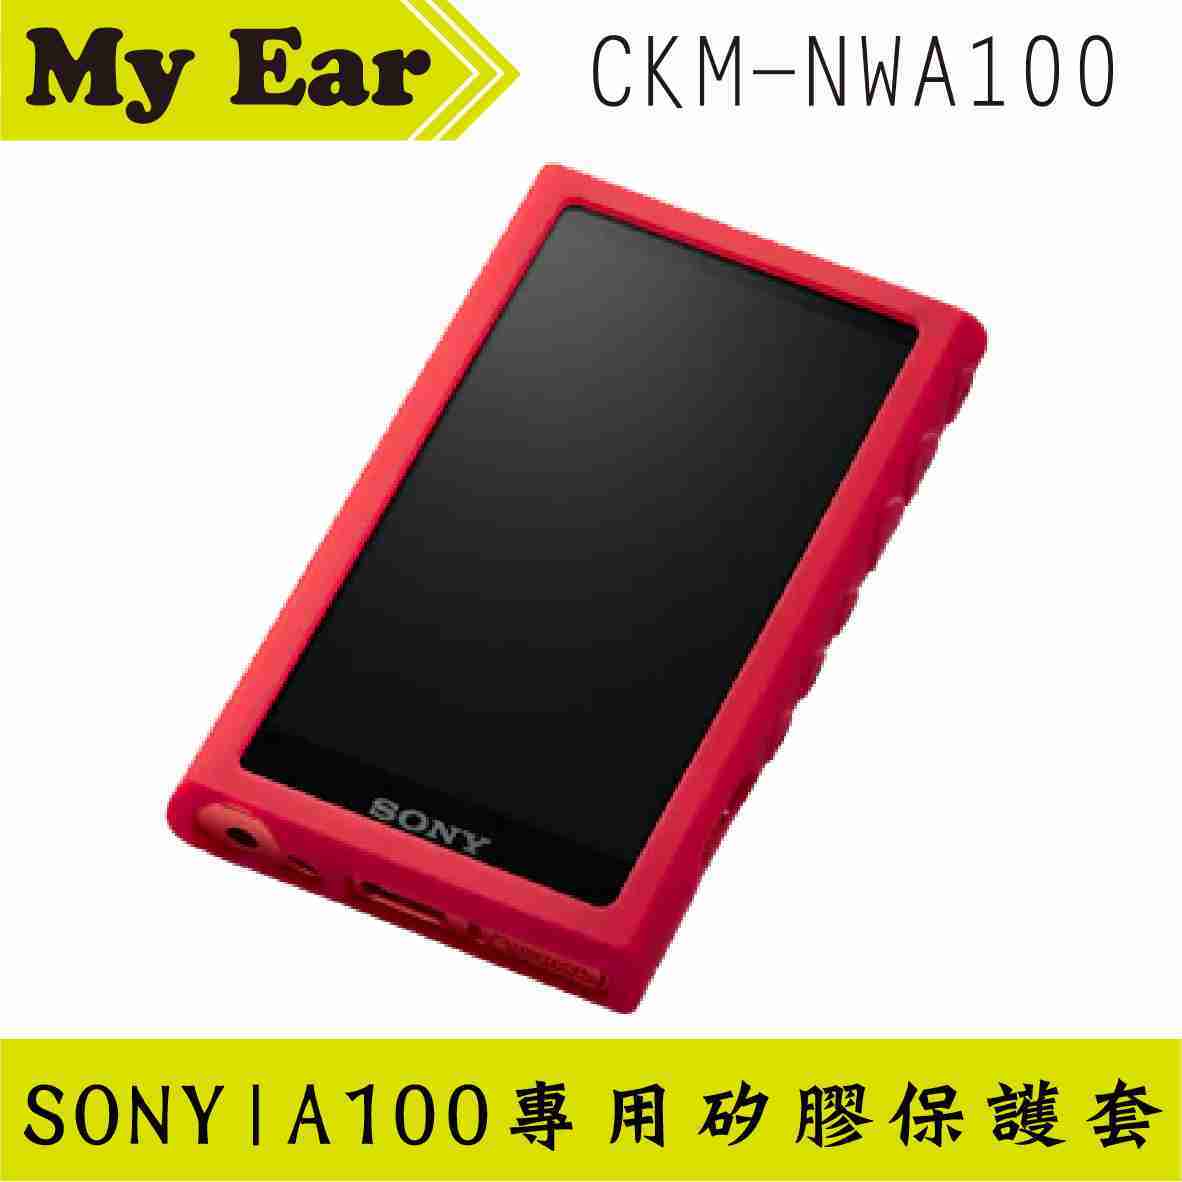 SONY 索尼 CKM-NWA100 紅色 Walkman® 專用矽膠保護殼 | My Ear 耳機專門店